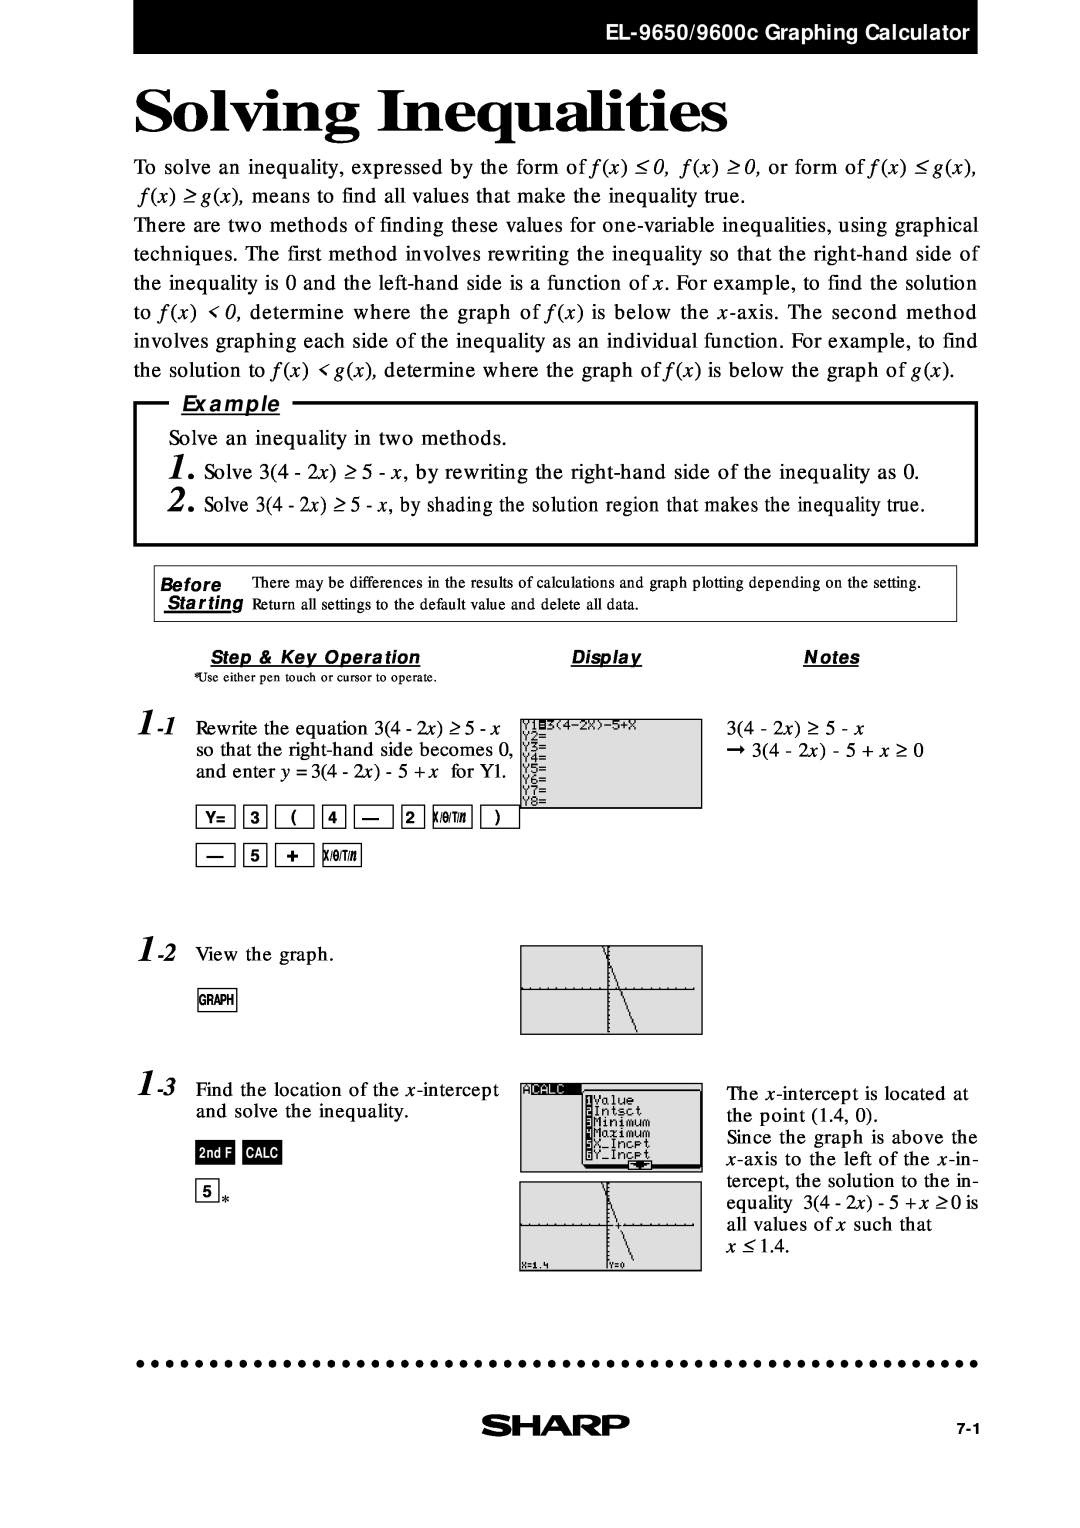 Sharp EL-9400, EL-9600c manual Solving Inequalities, EL-9650/9600c Graphing Calculator, Example 